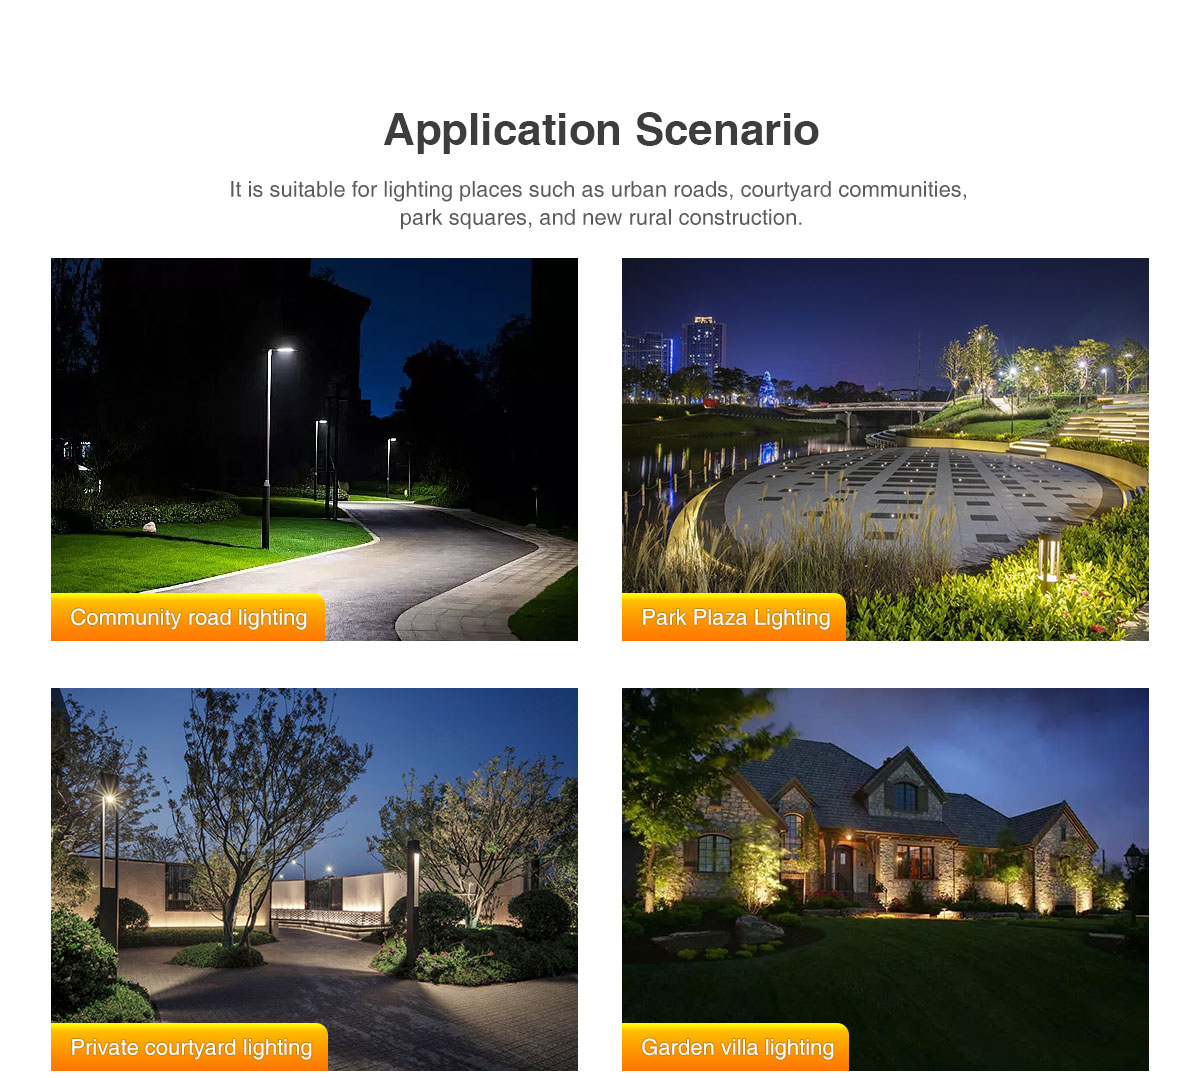 outdoor waterproof LED garden light 100W for community park villa street lighting